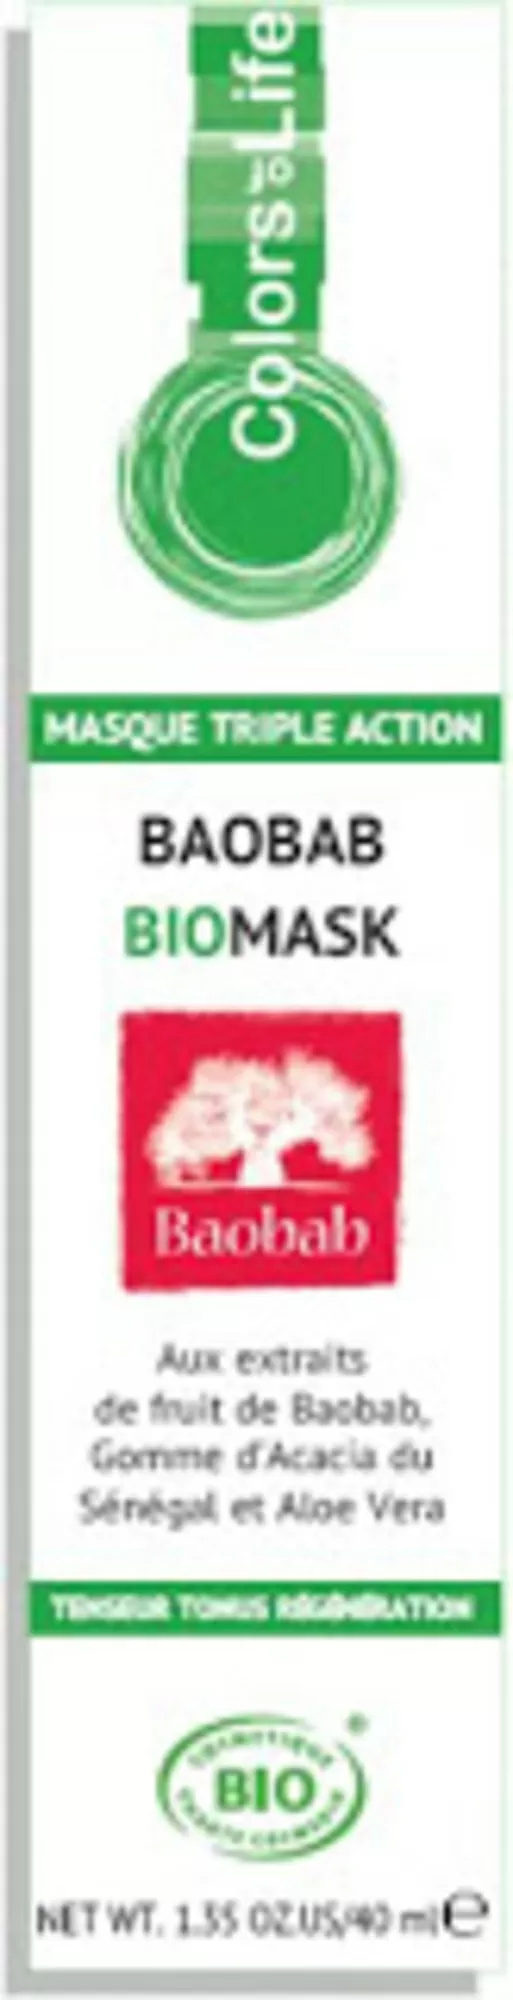 Baobab BioMask - единственная в мире биомаска на основе плода баобаба